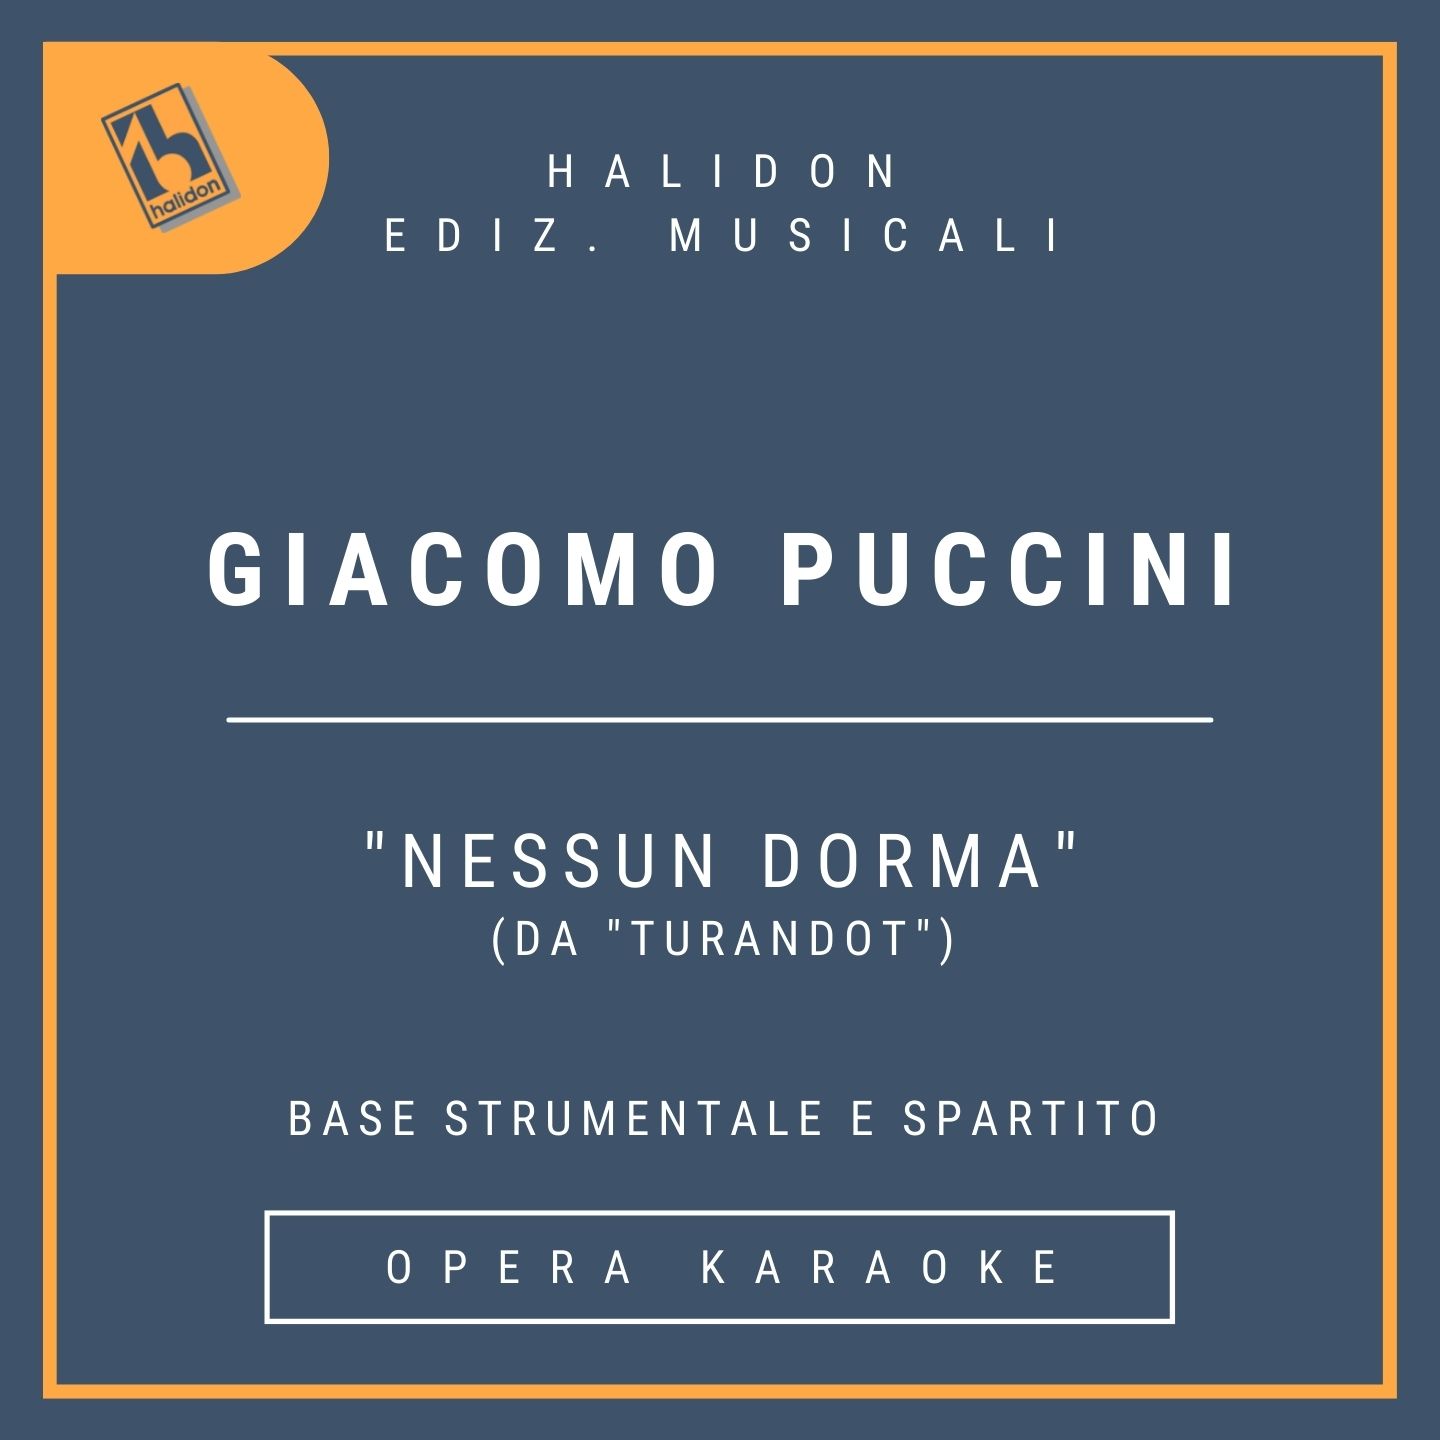 Giacomo Puccini - Nessun dorma (from 'Turandot') - Calaf Aria (tenor) - Instrumental track + sheet